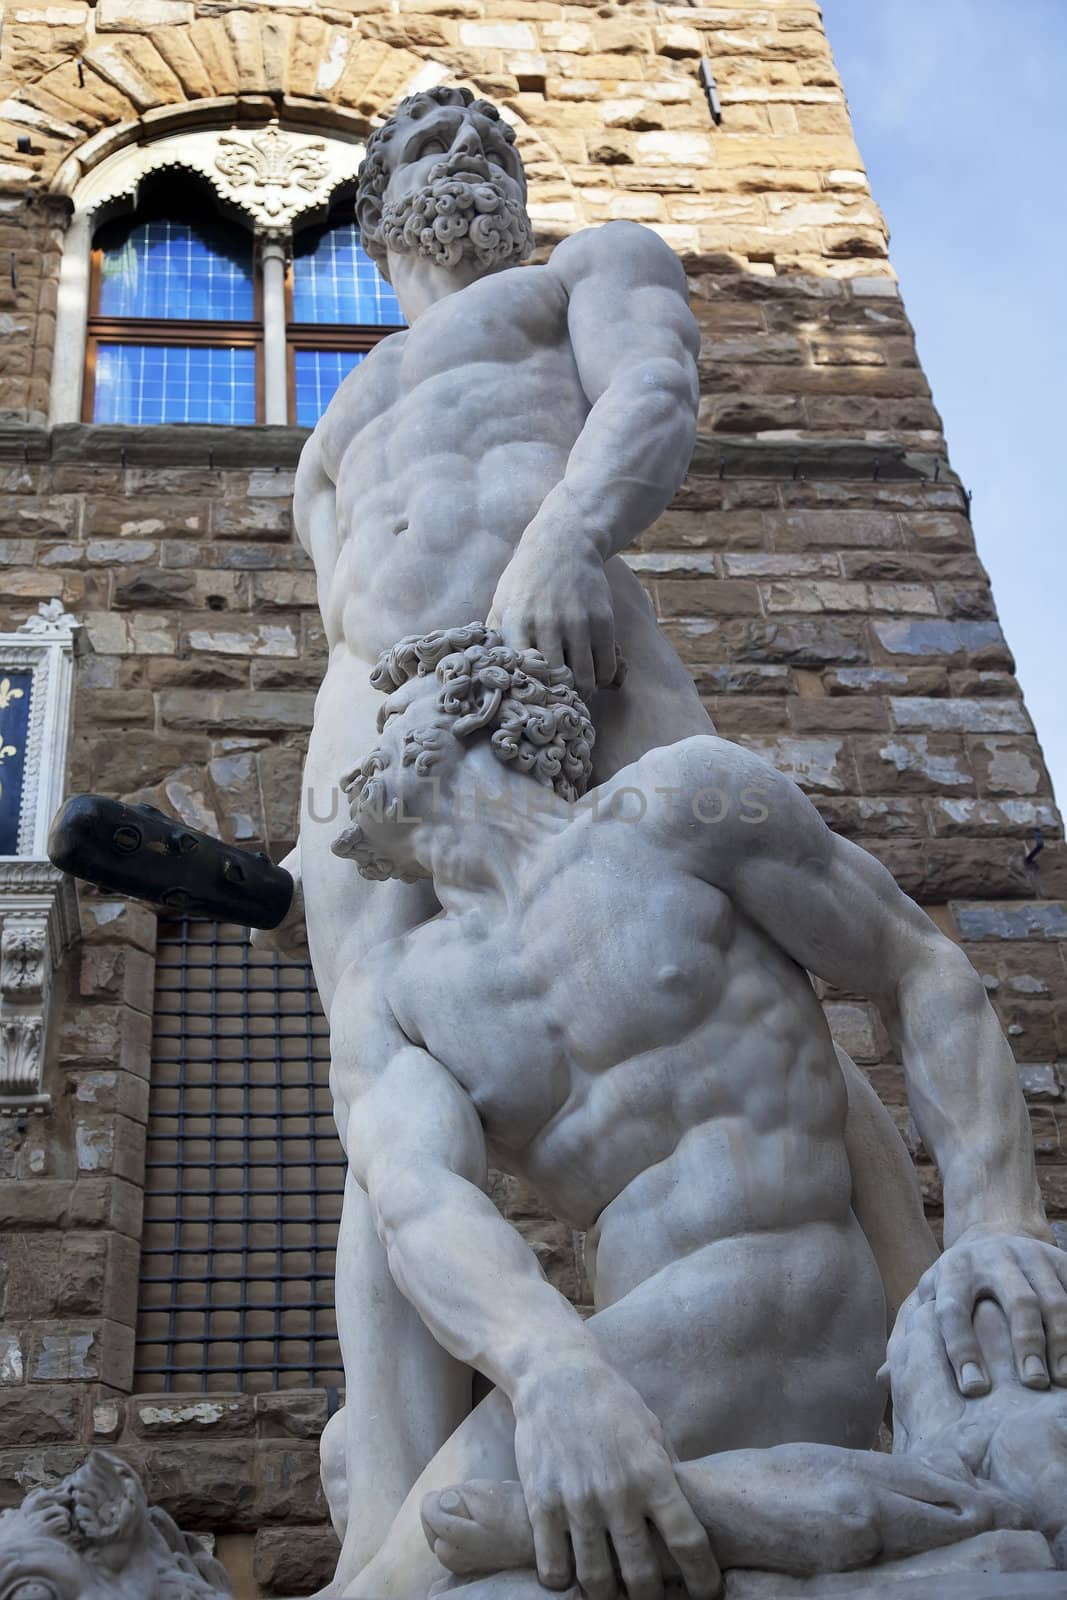 Hercules and Cacus Statue by Baccio Bandinelli Piazza della Signoria Palazzo Vecchio Florence Italy Sculpted in 1536 Picture taken from Public Street